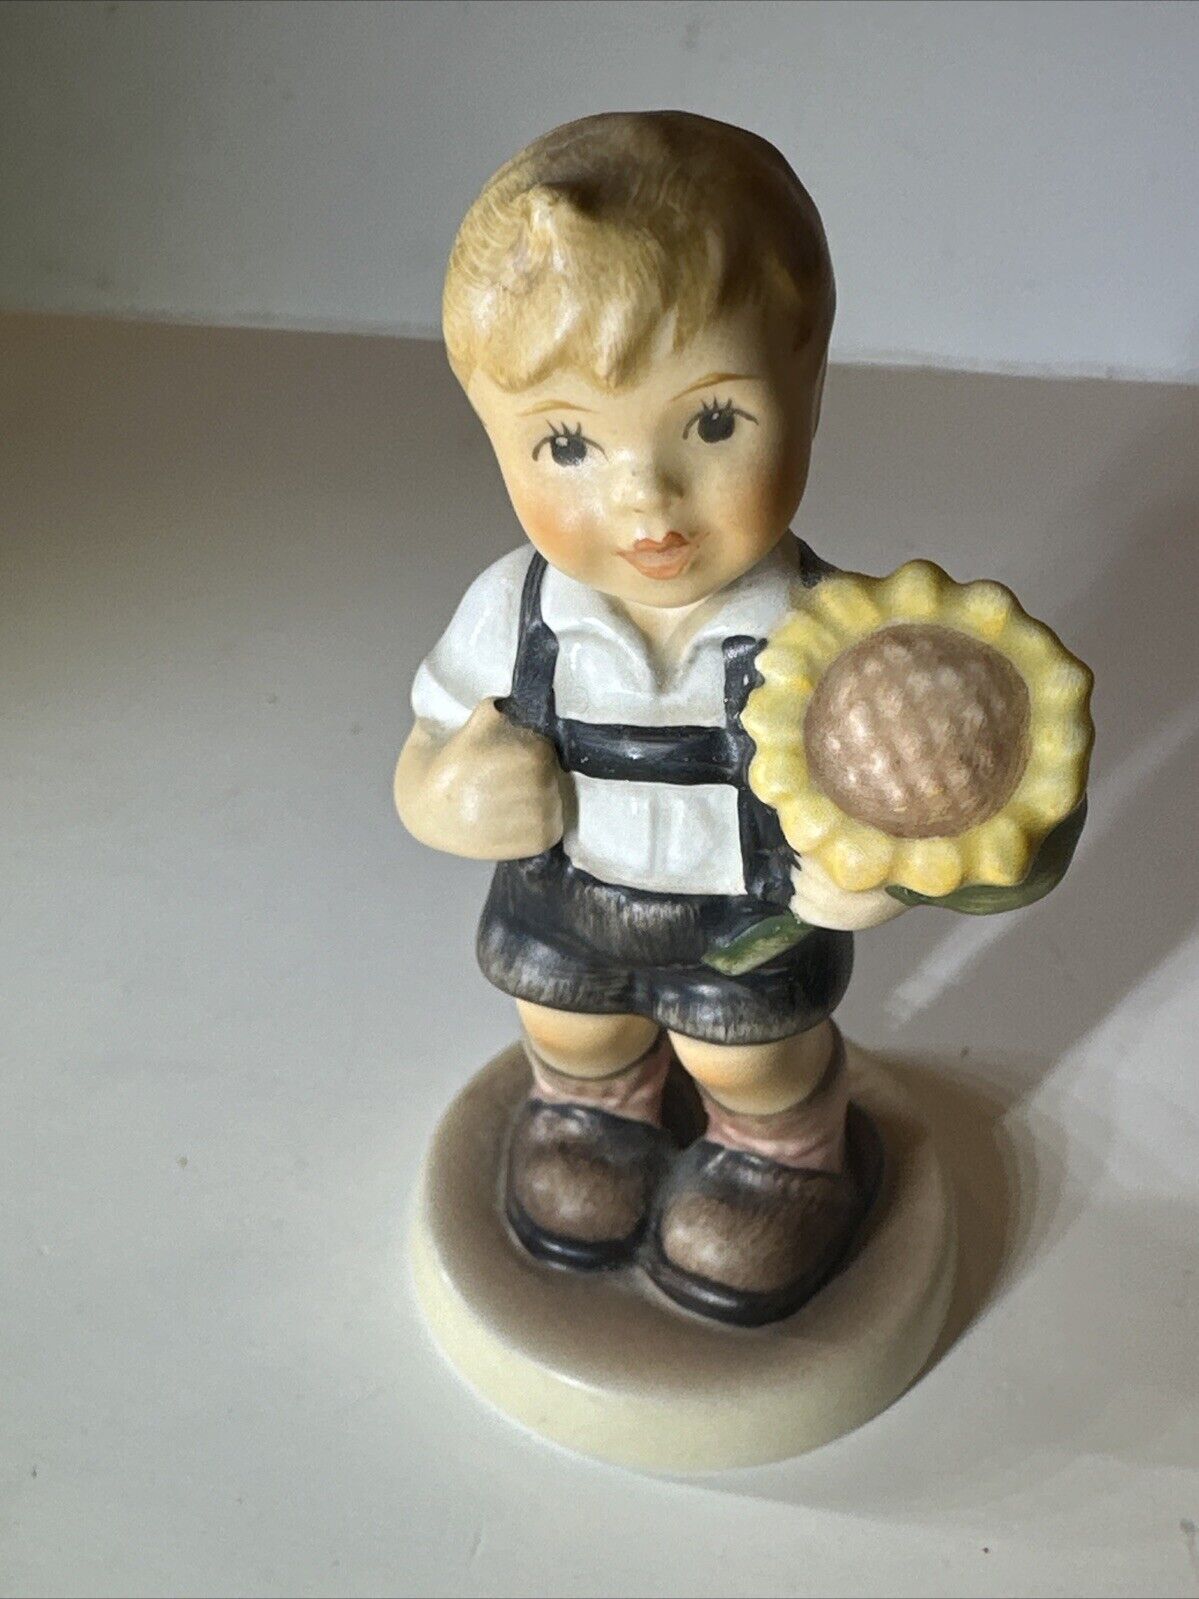 Hummel figurine, Sunflower Boy, Item #2219, TMK-9, Germany